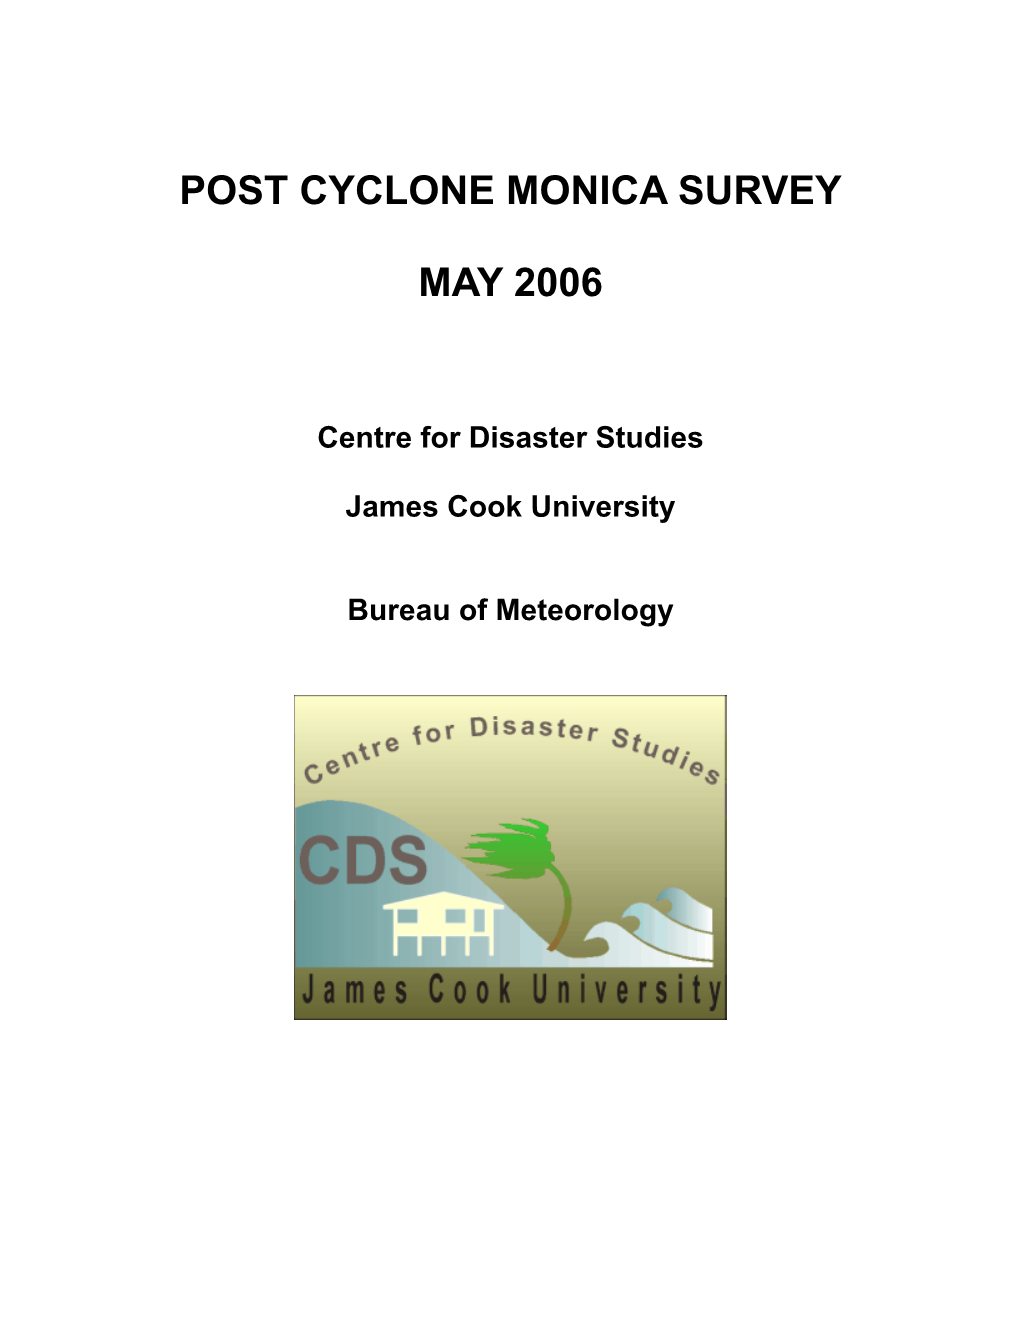 Post Cyclone Monica Survey May 2006